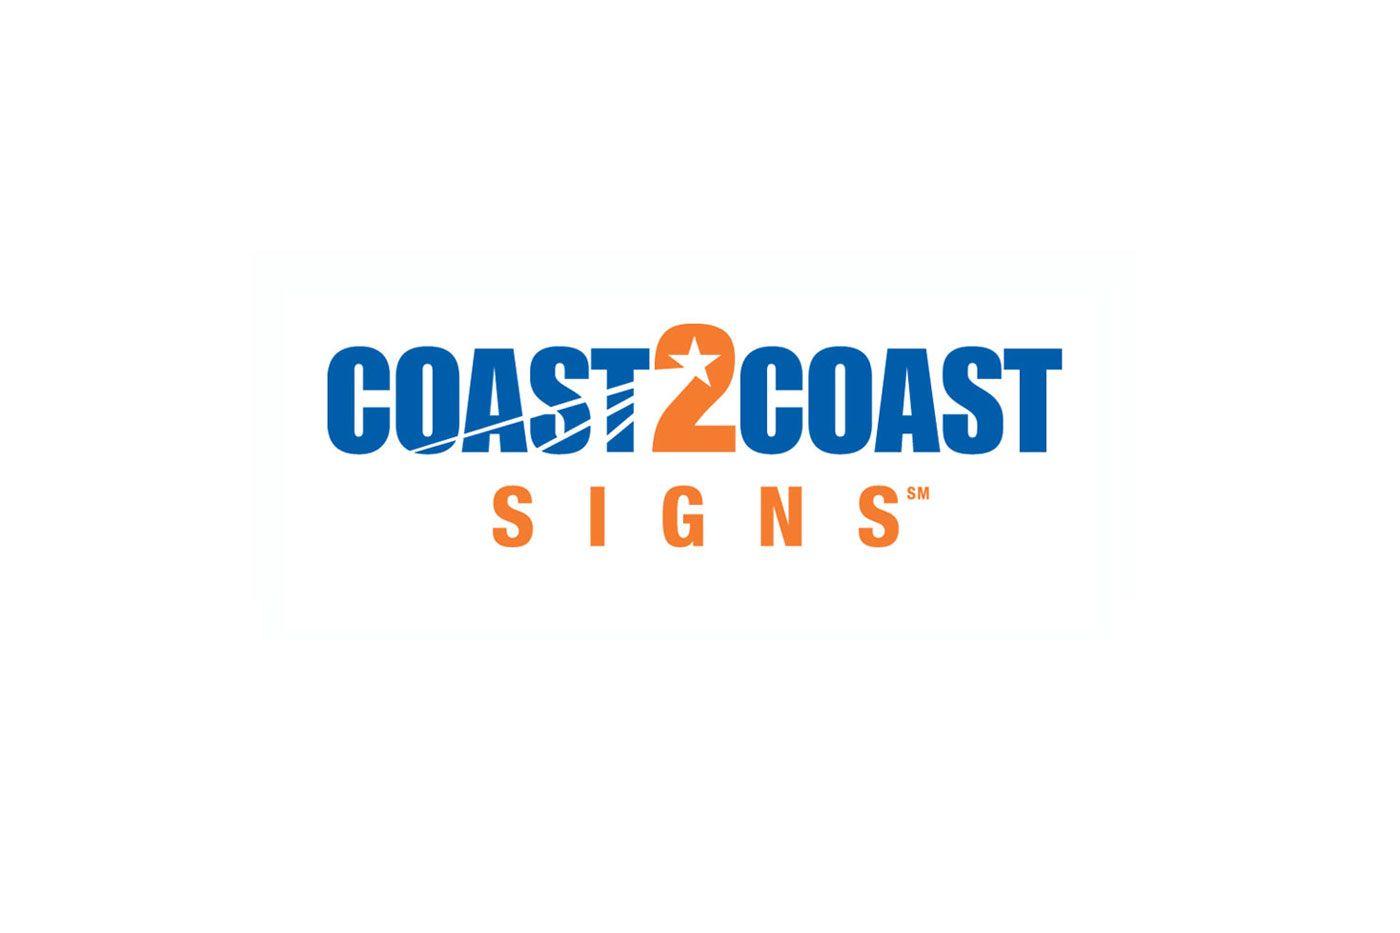 Signs Logo - Coast2Coast Signs logo | Nicholas Communications